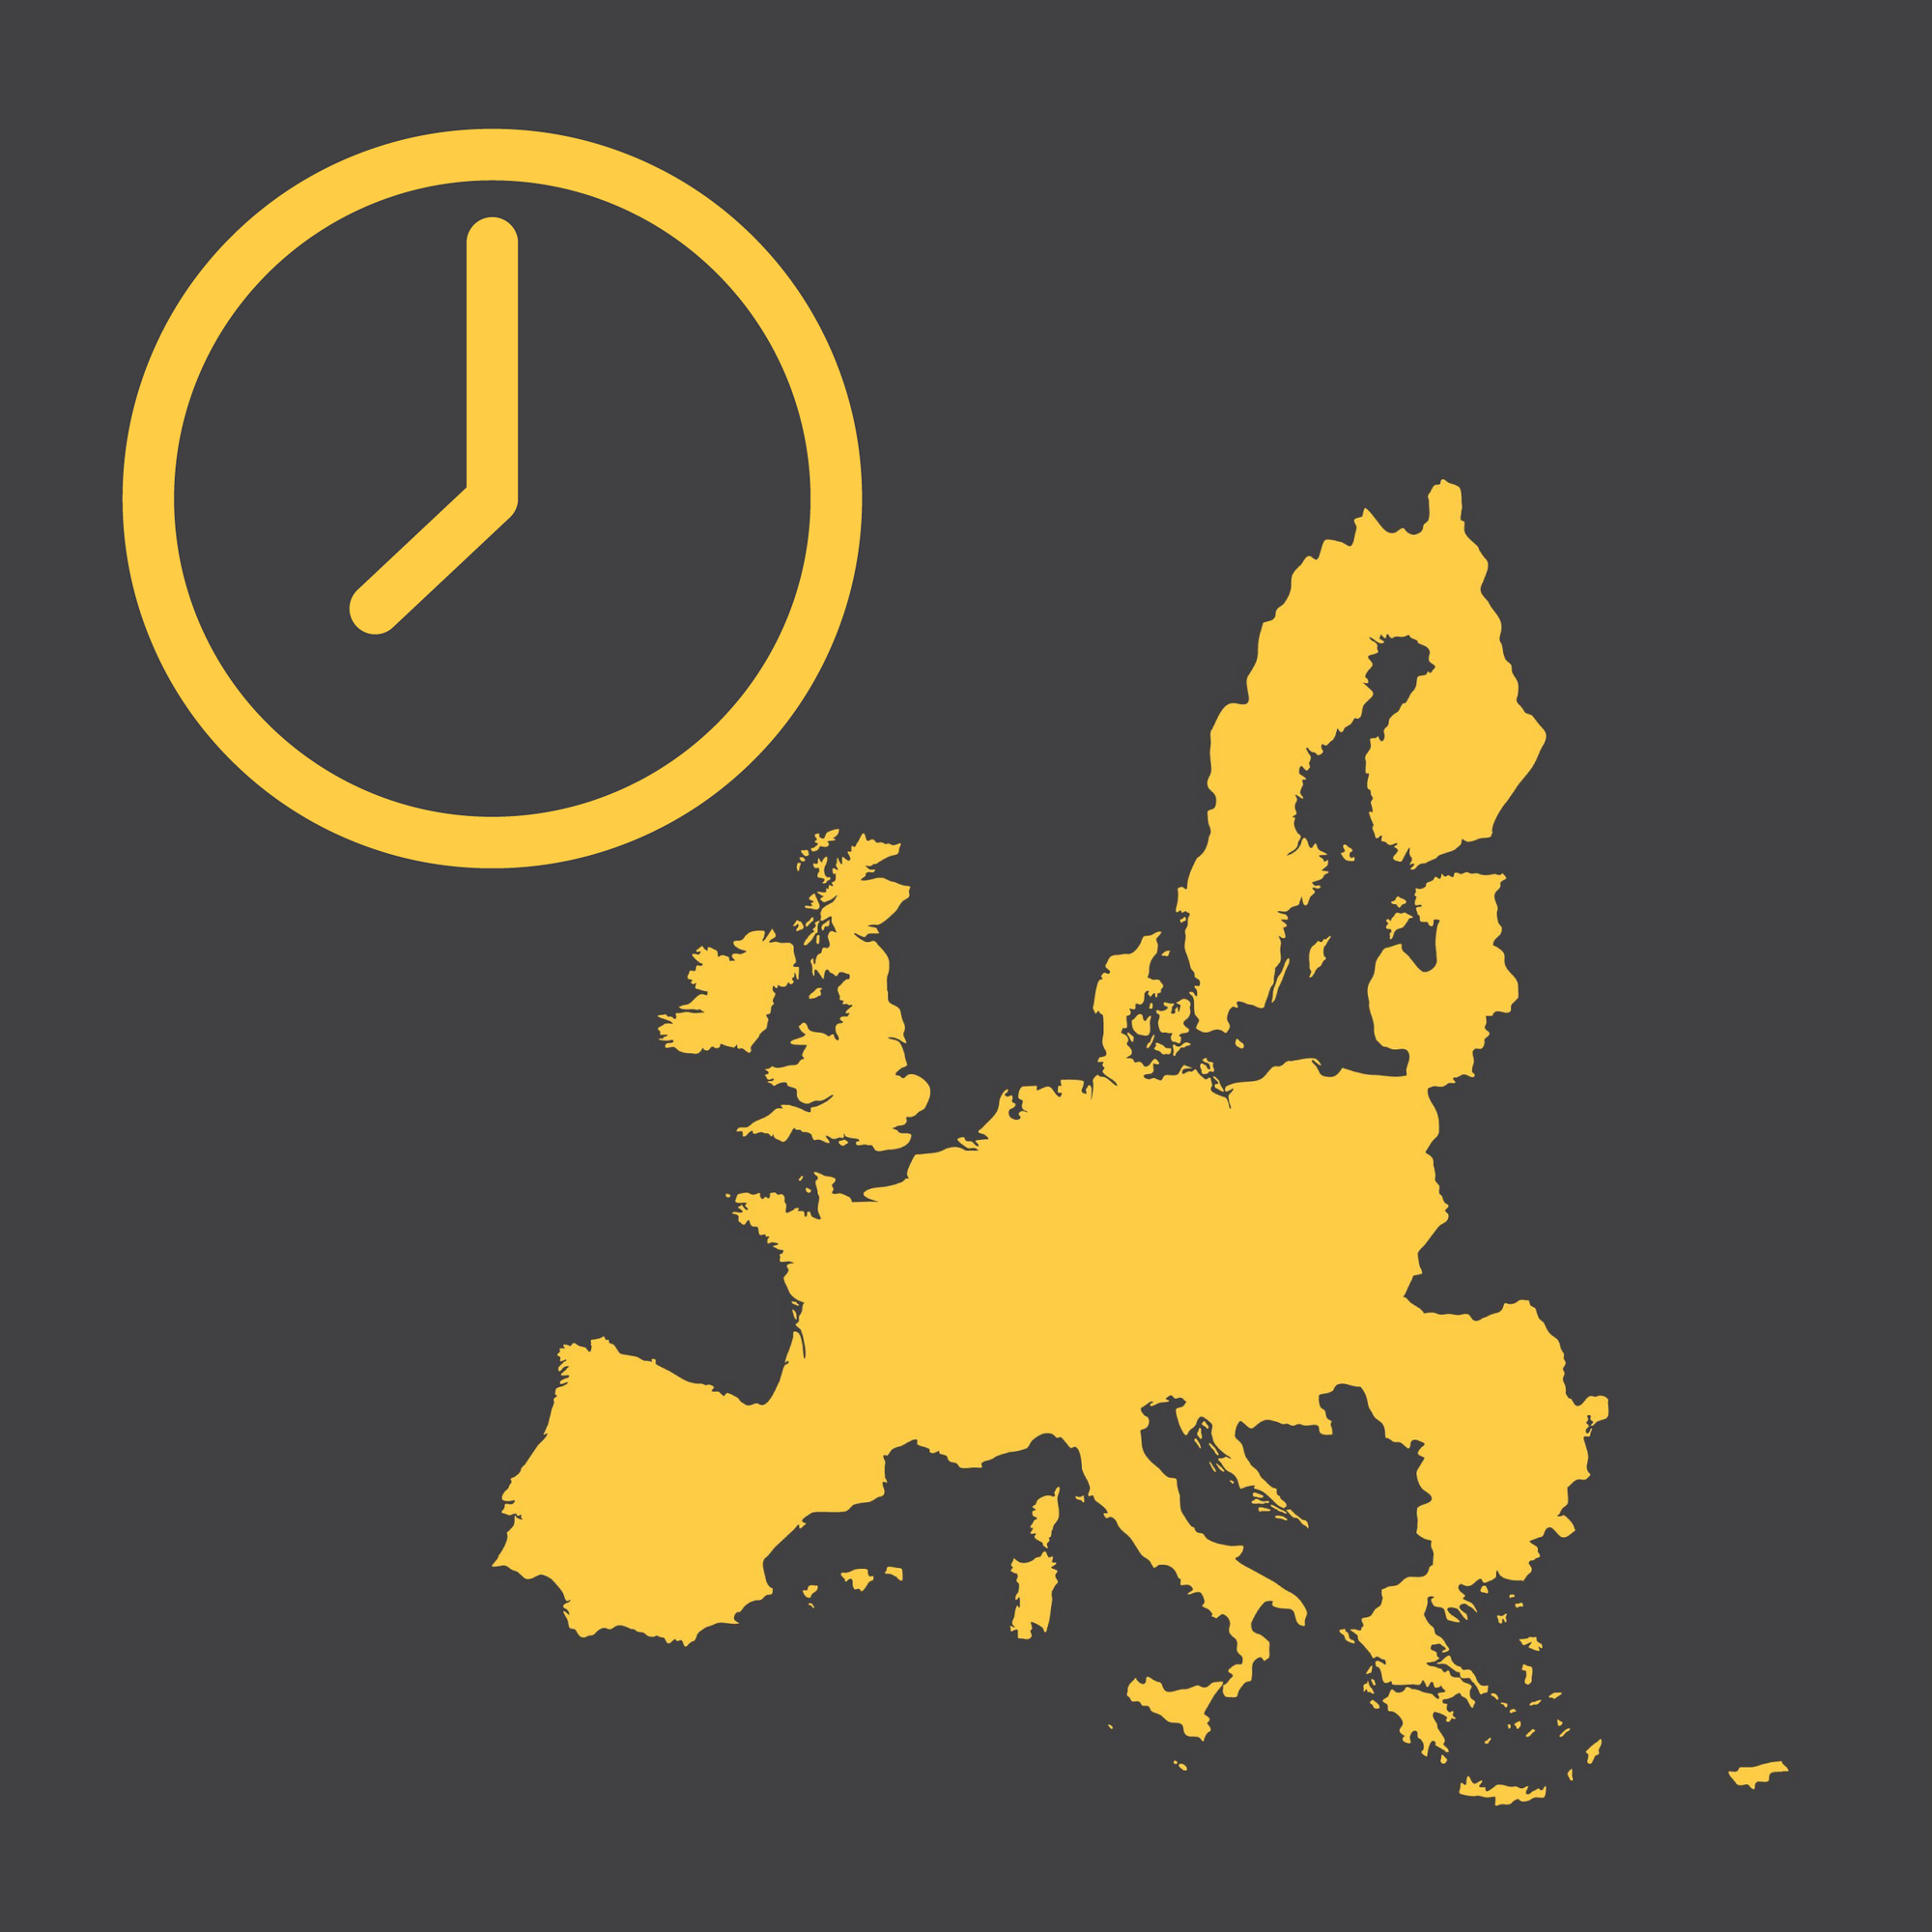 Europe Modern Wall Clocks - City Map Wall Clocks - Point Two Design